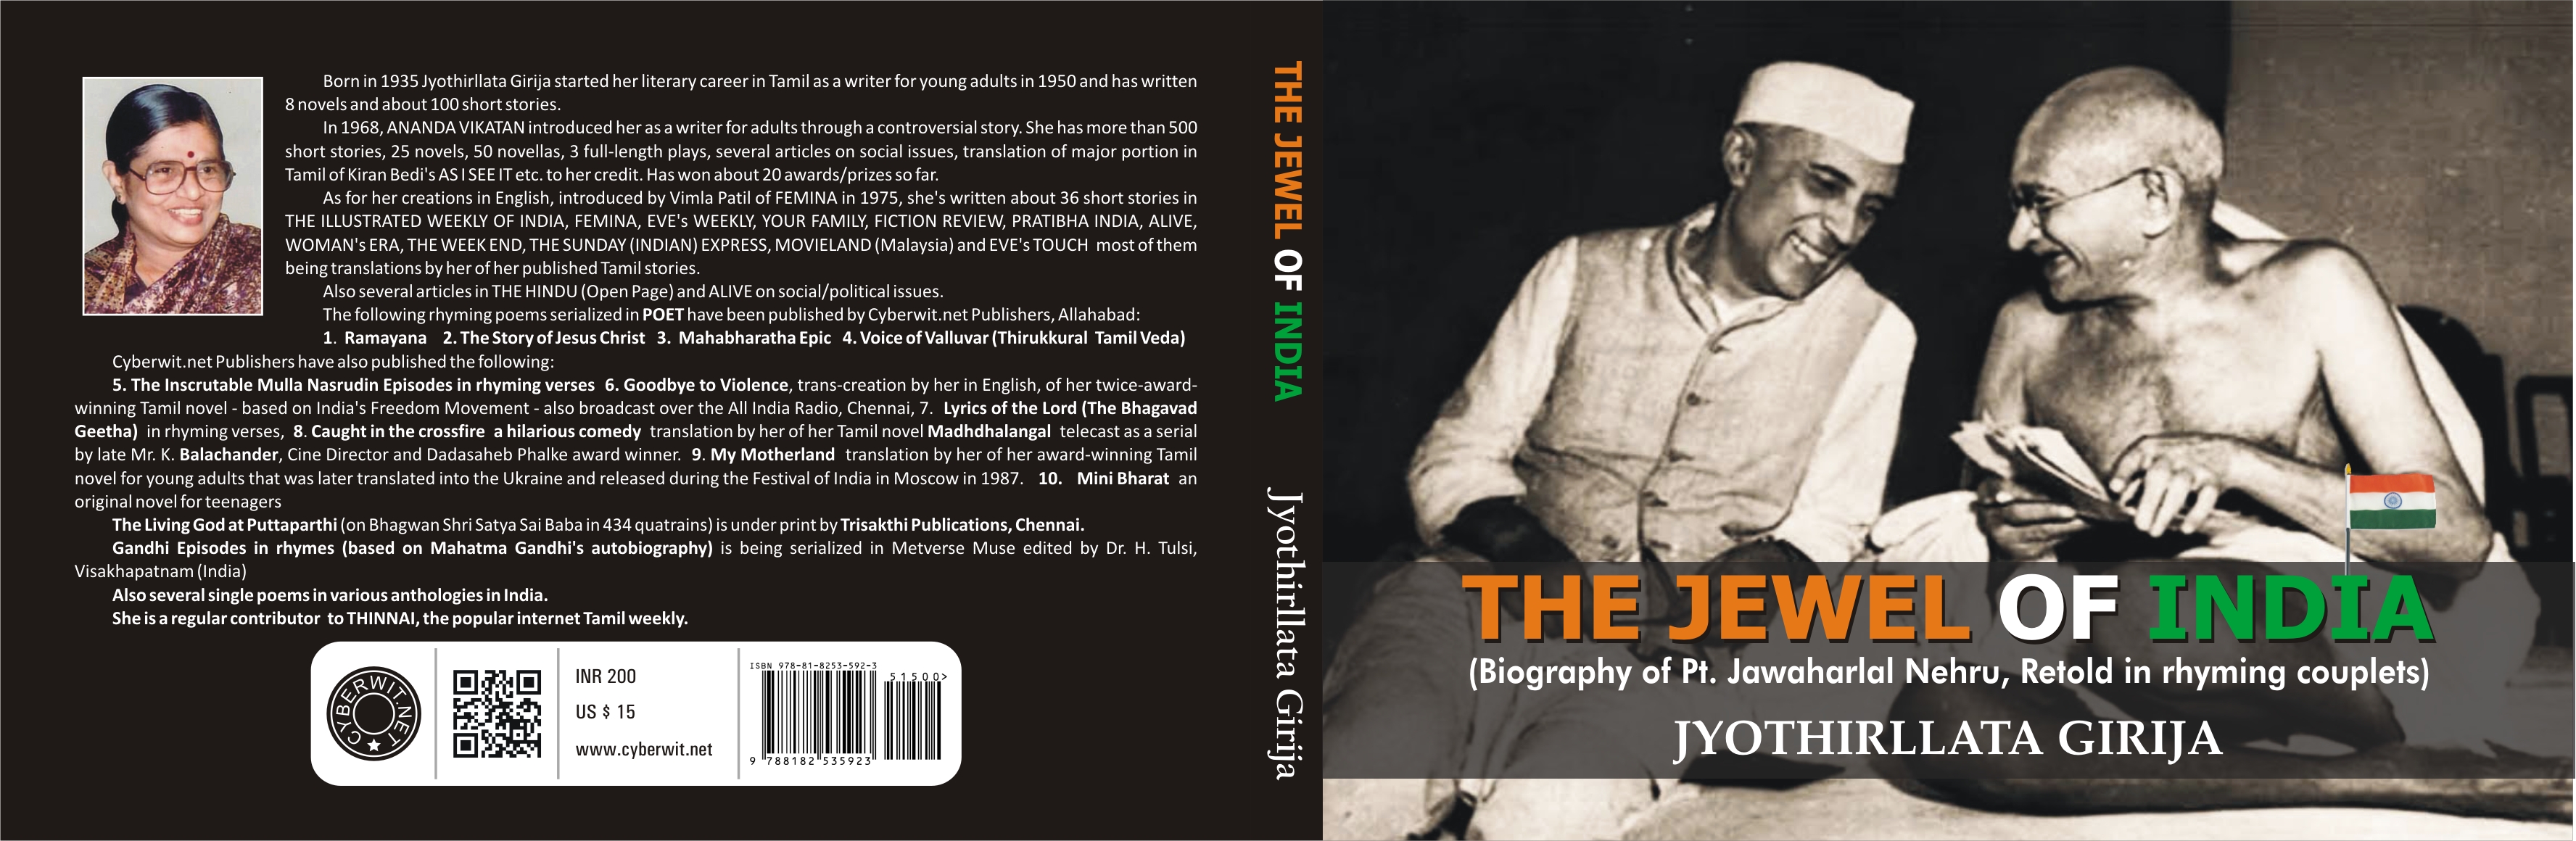 Jawaharlal Nehru’s biography retold in rhyming couplets